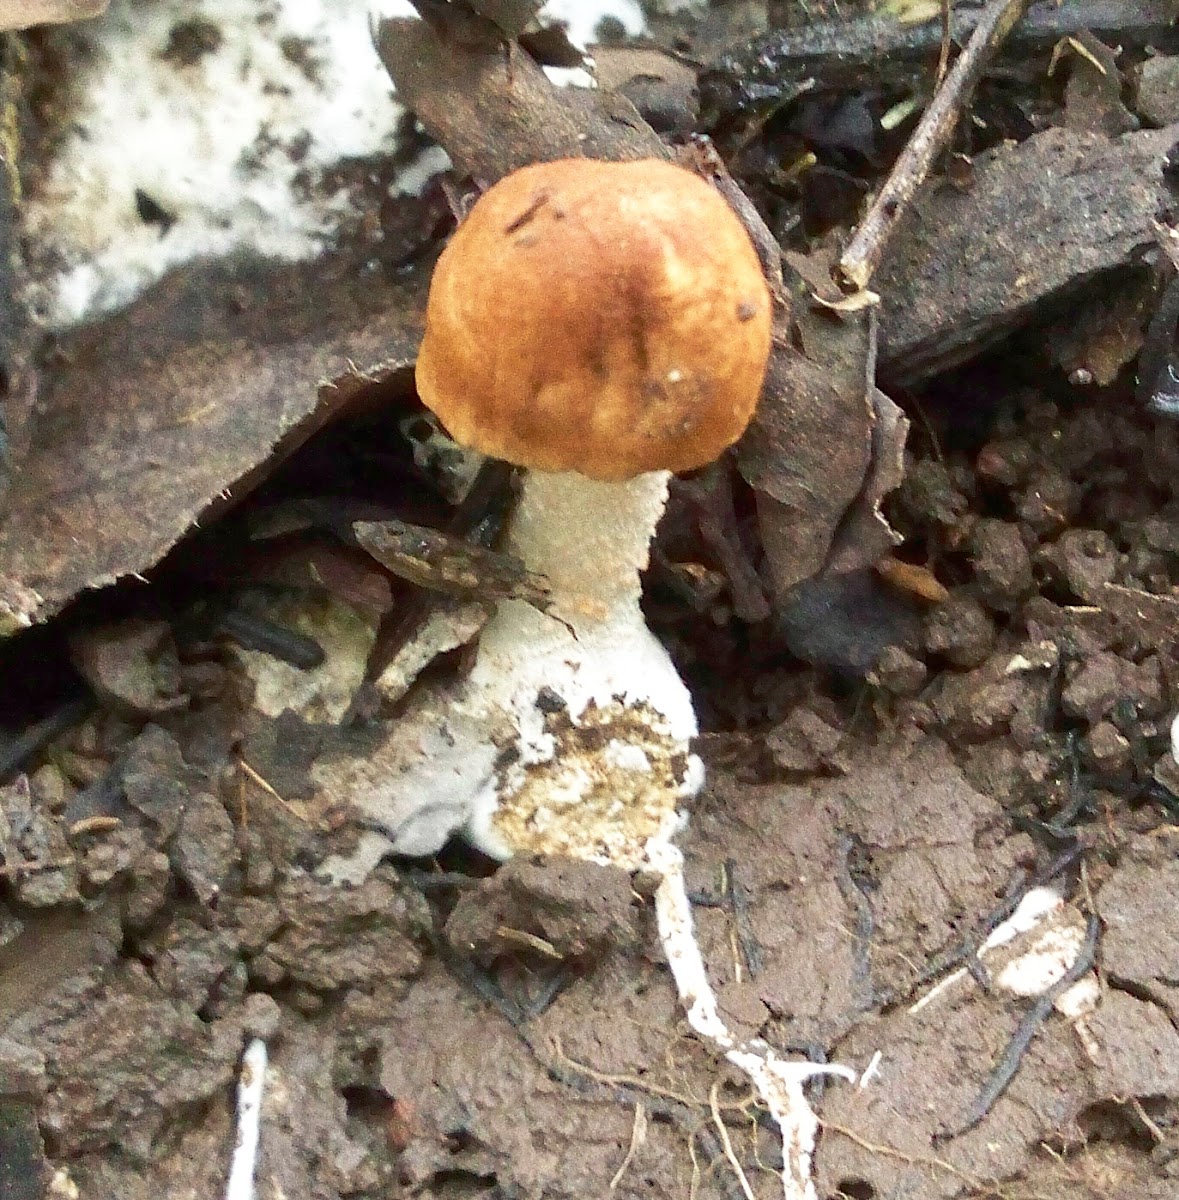 Sheathed Fungus